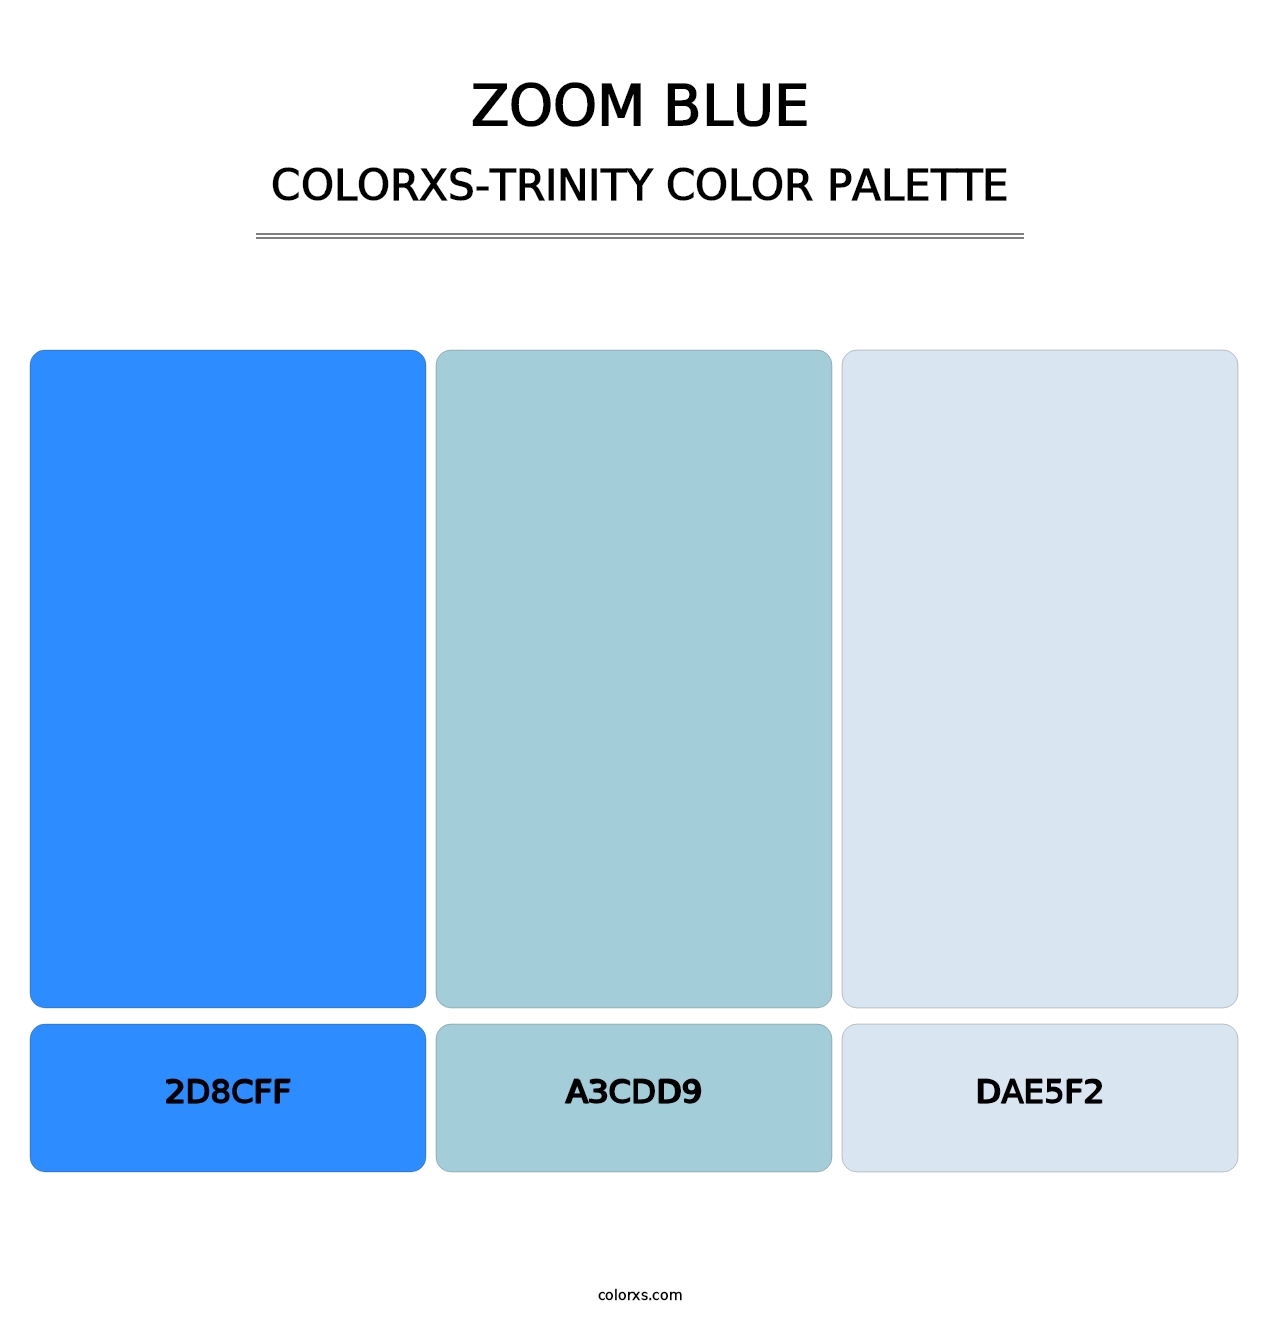 Zoom Blue - Colorxs Trinity Palette